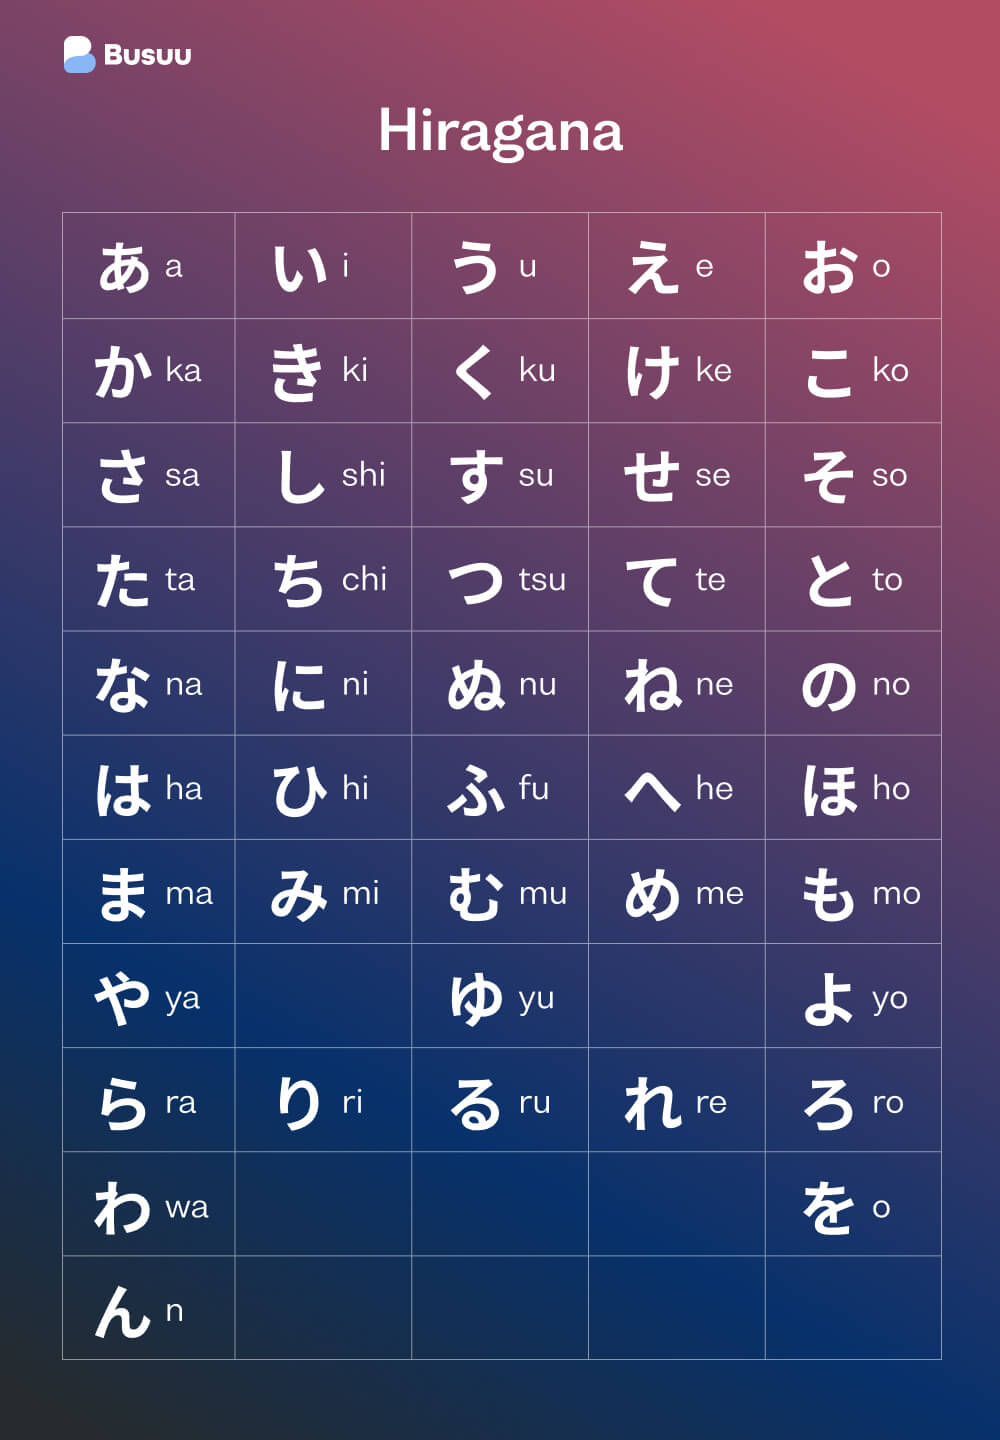 Hiragana chart, courtesy of language-learning app Busuu's Japanese alphabet guide